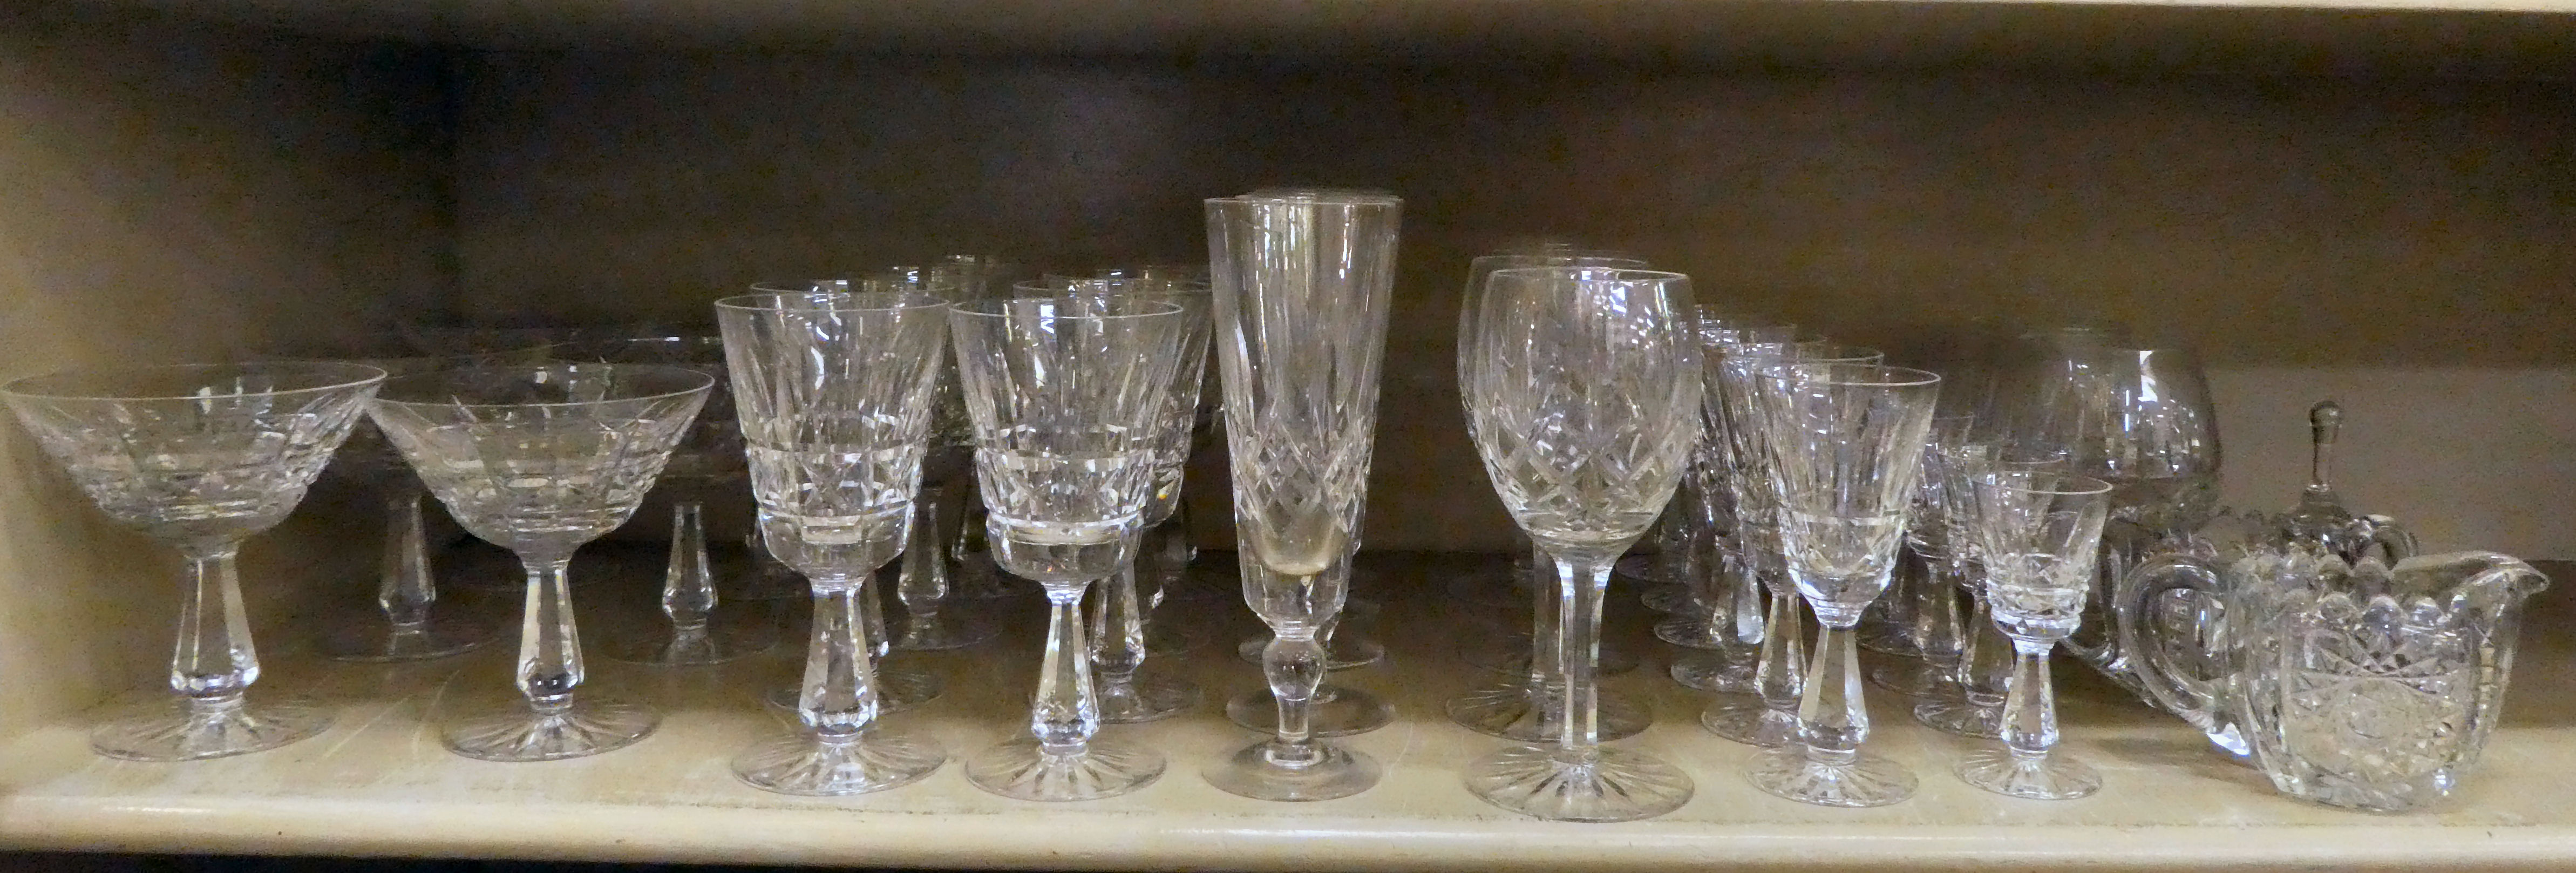 Glassware: to include Thomas Webb crystal pedestal wines